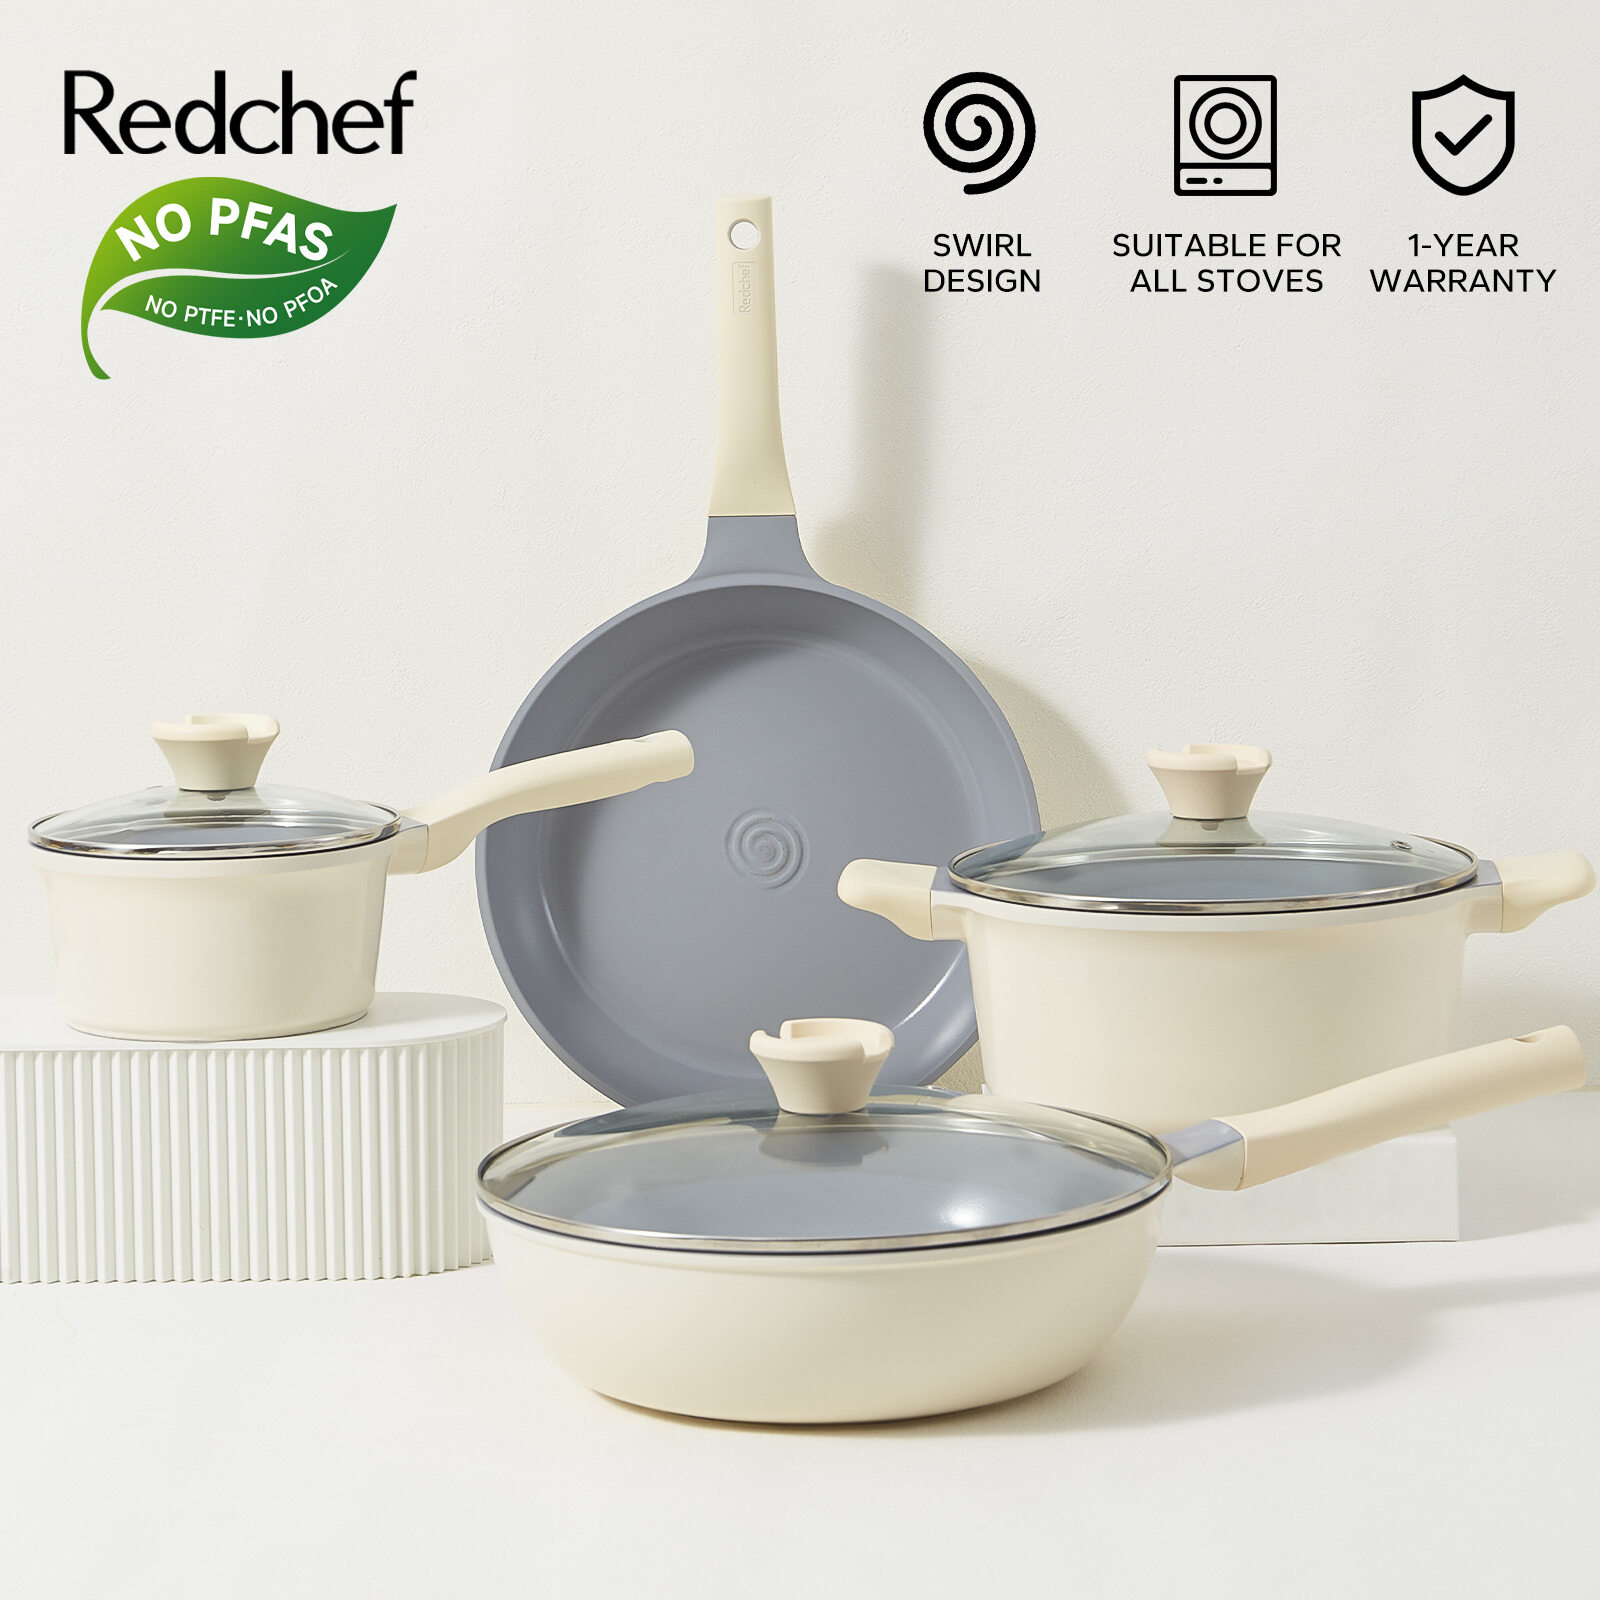  Redchef Ceramic Pots and Pans Set Non Stick, PFAS PFOA